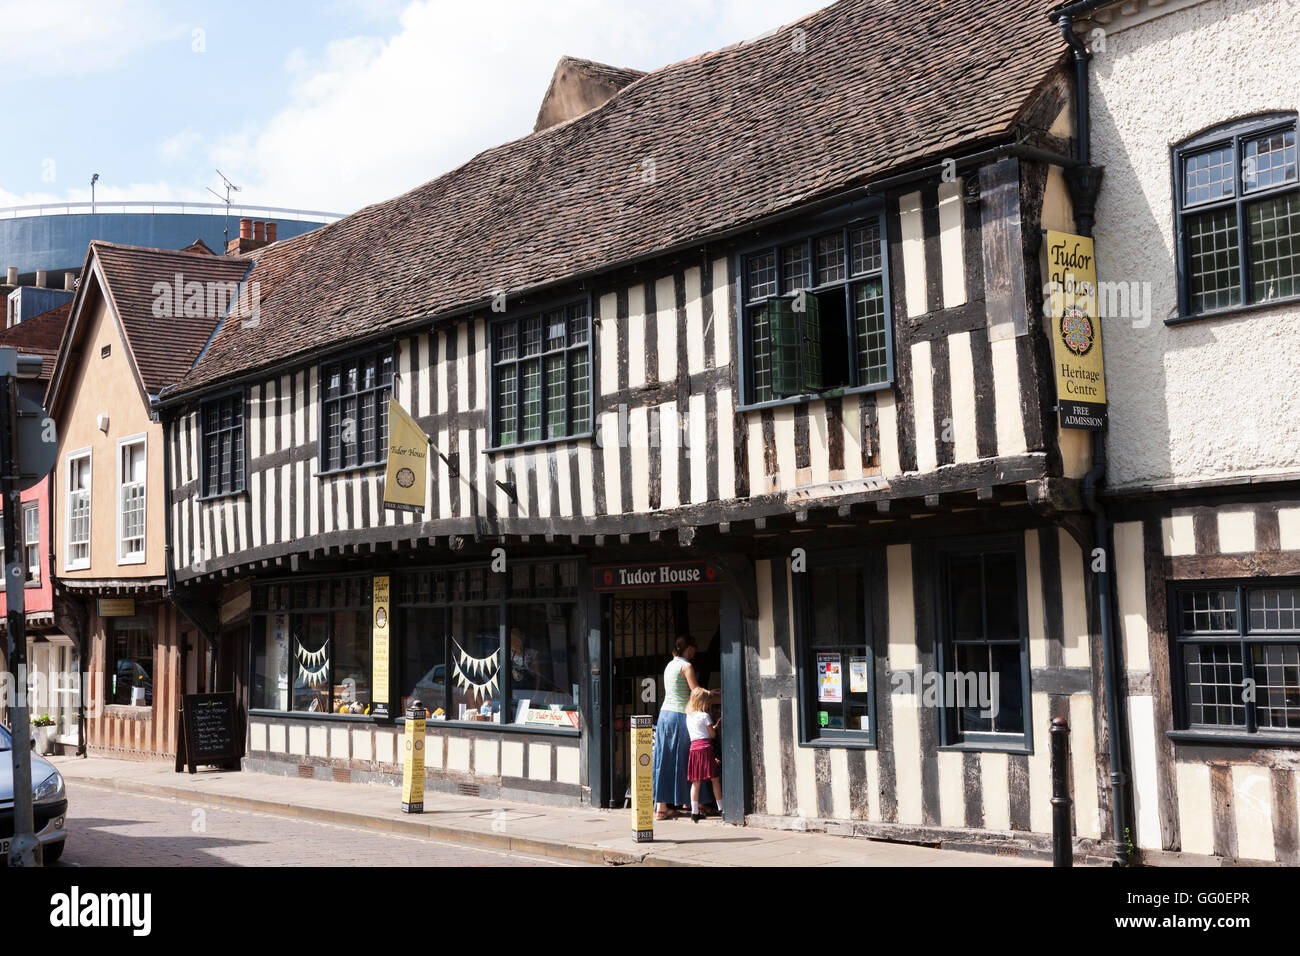 Le Tudor House Museum. Frère St / Friar street, Worcester WR1 2NA. UK Banque D'Images